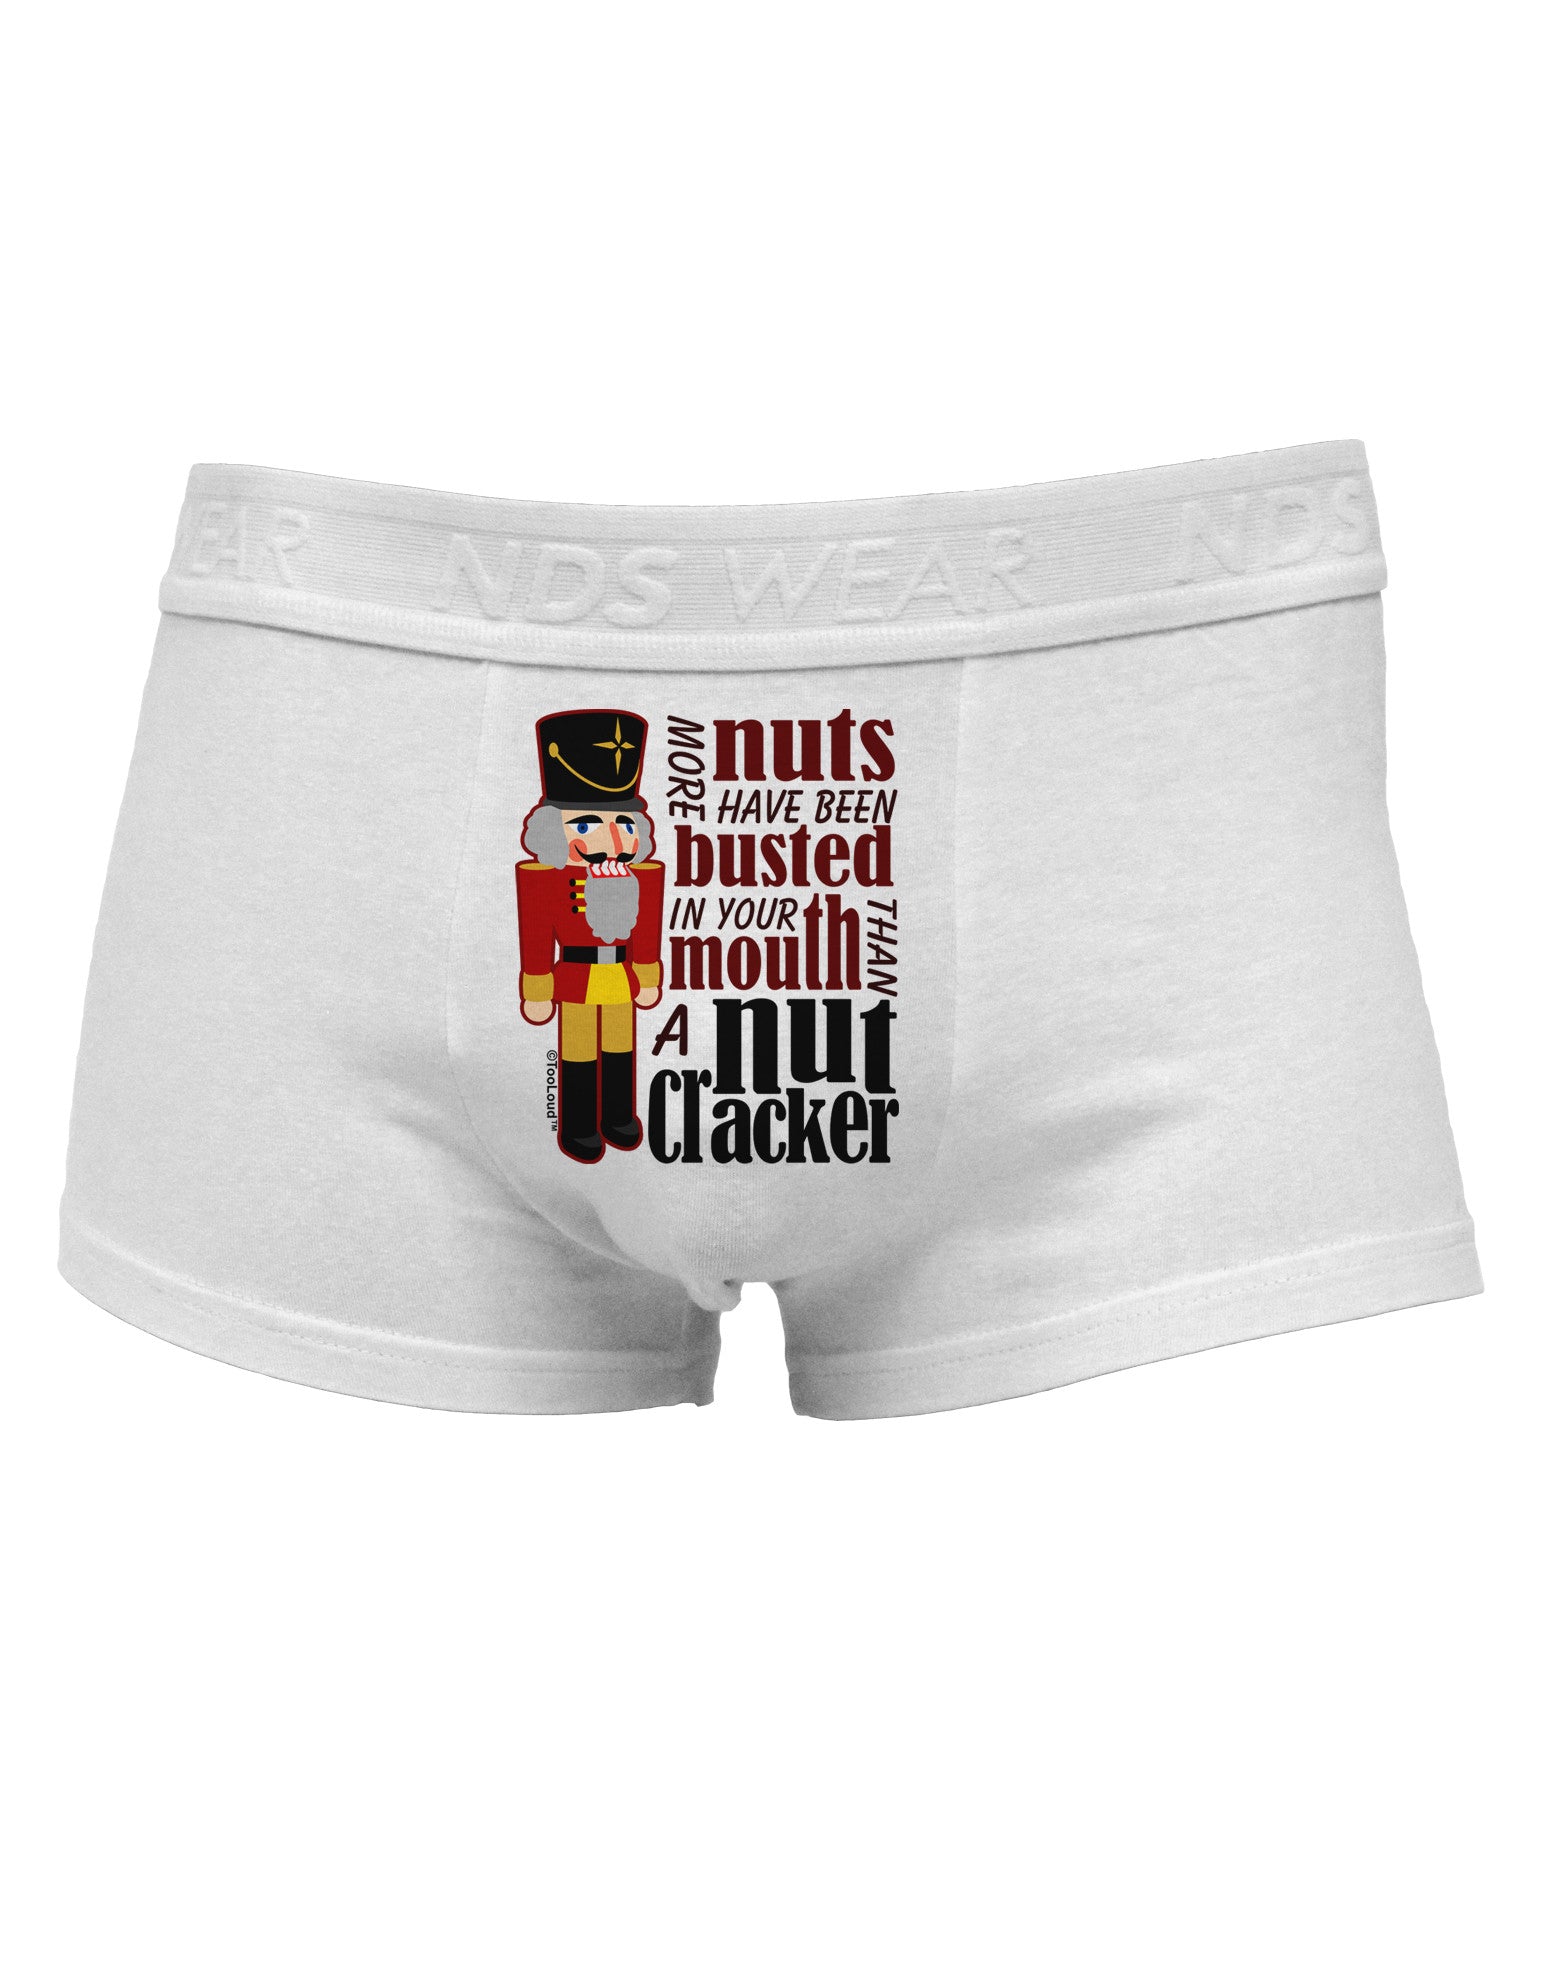 Men's Underwear Sale: Boxers, Trunks & More